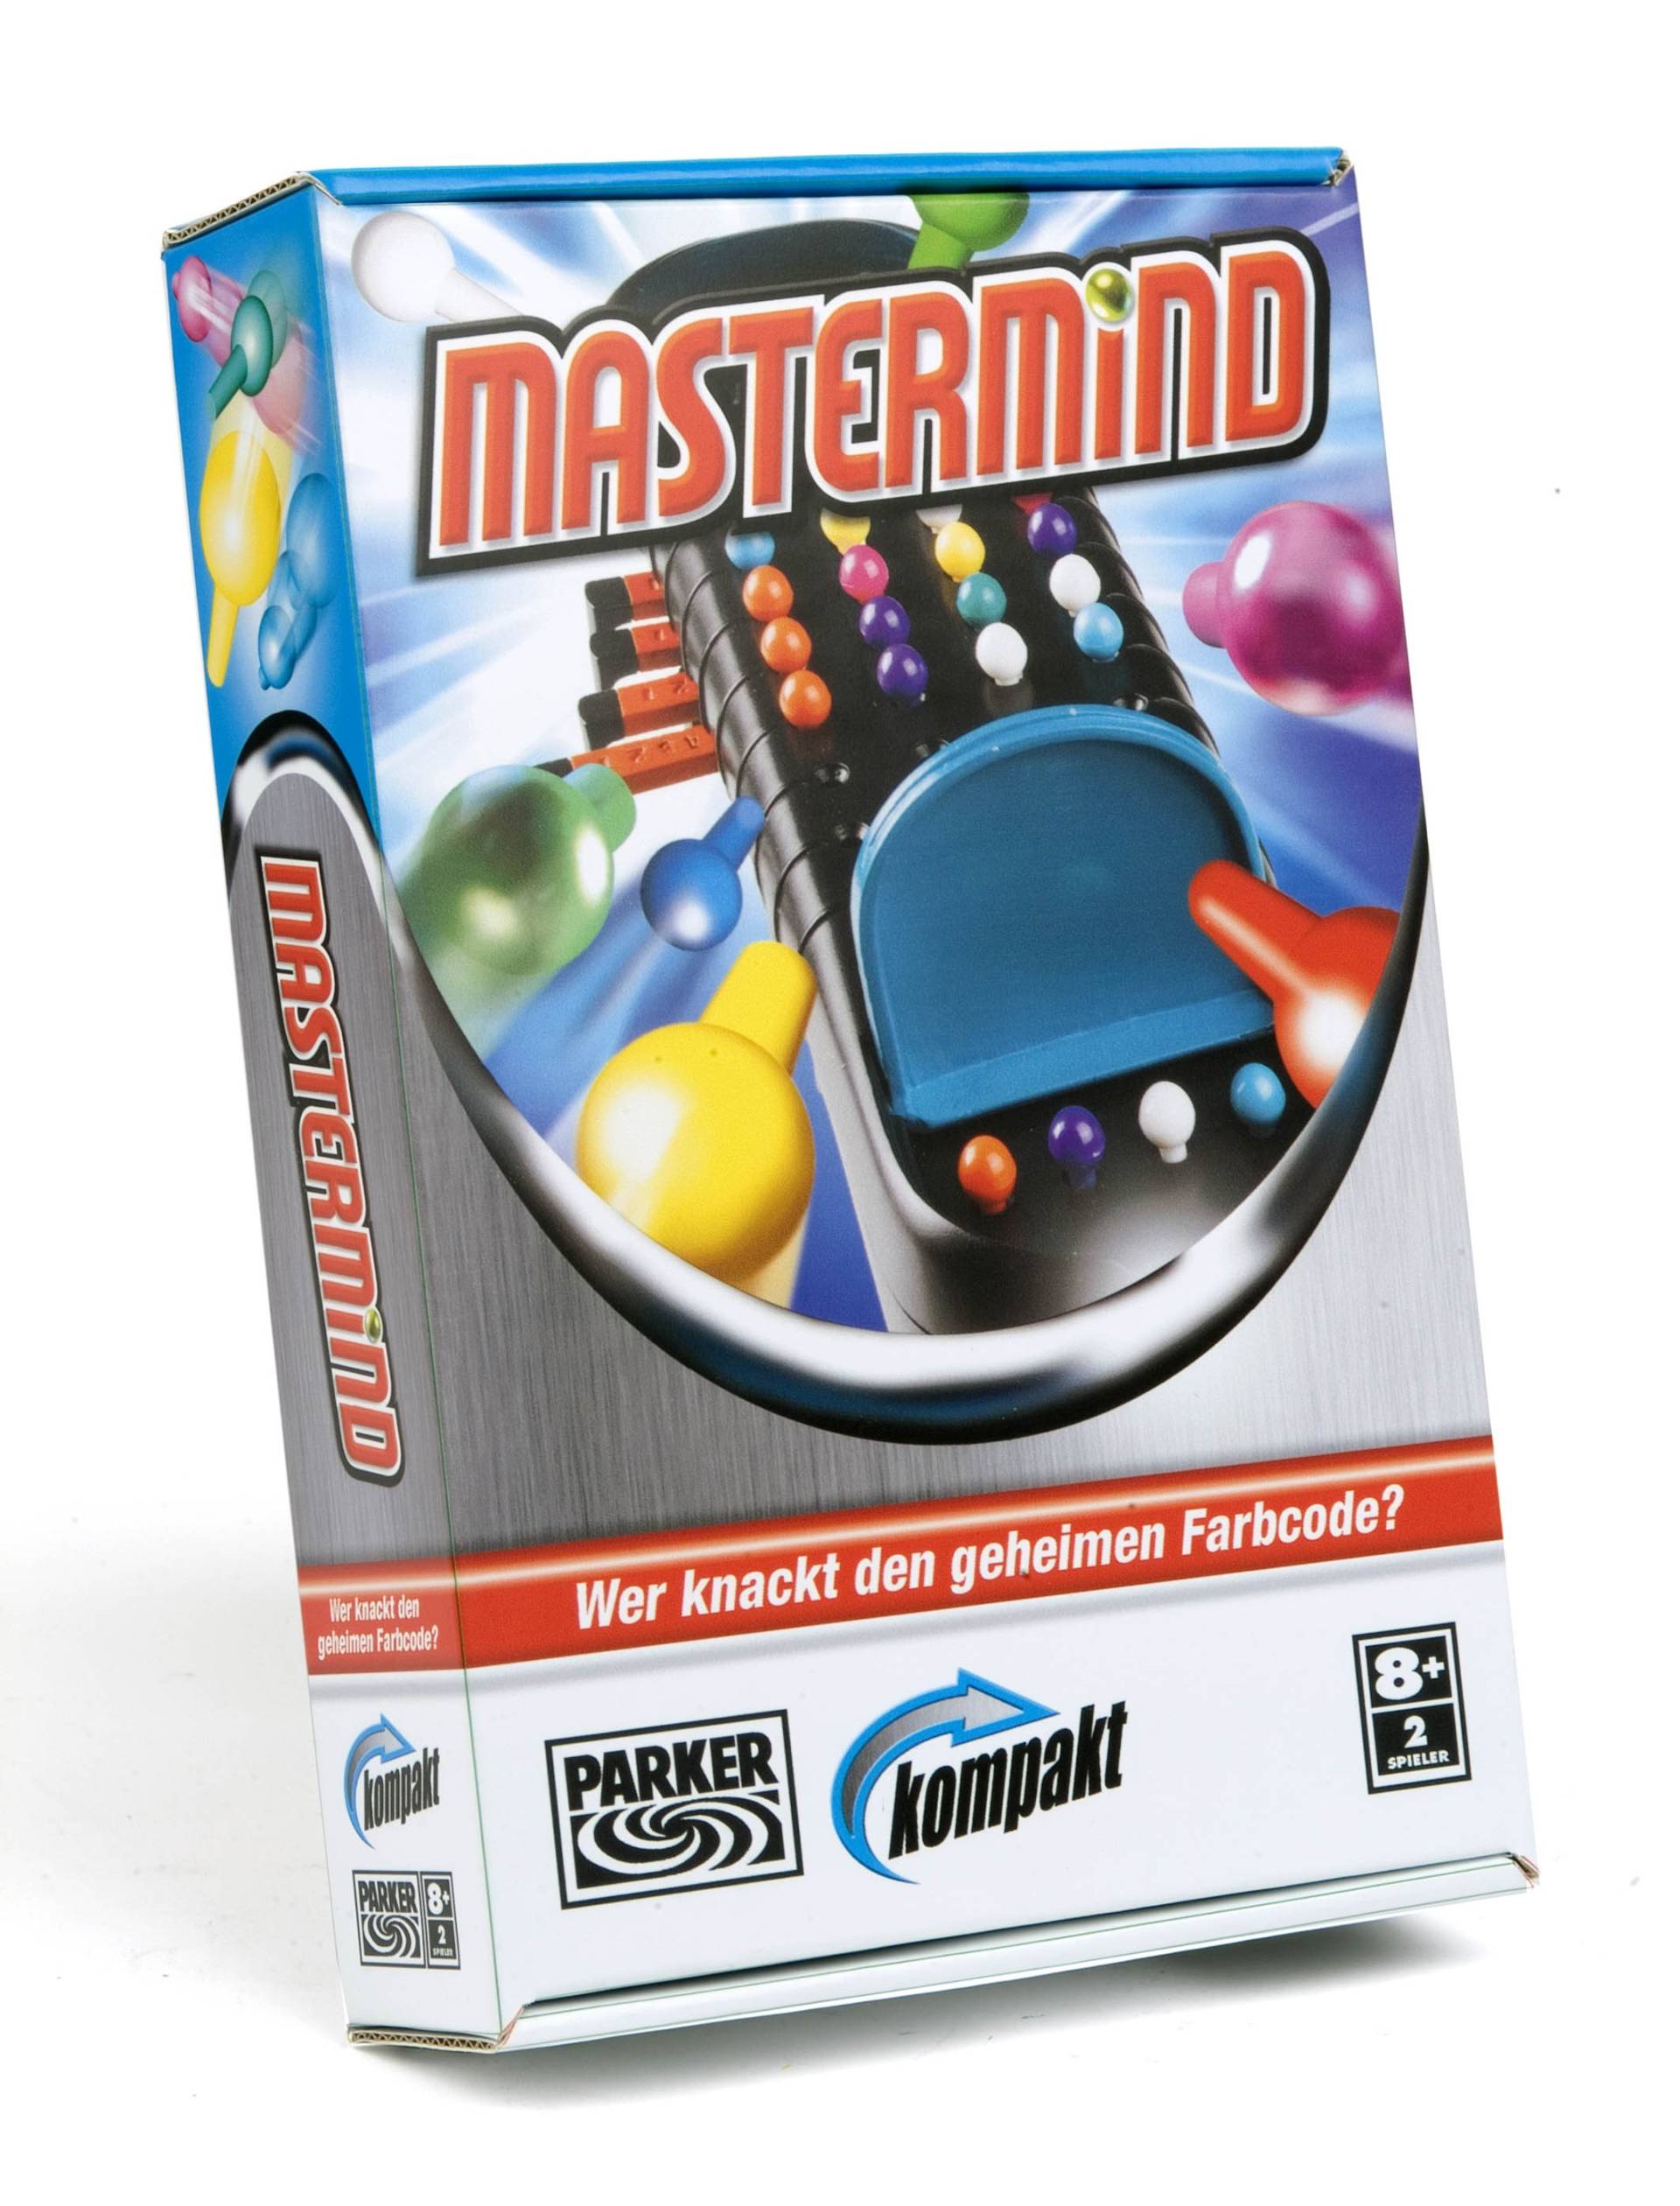 Mastermind kompakt von Hasbro